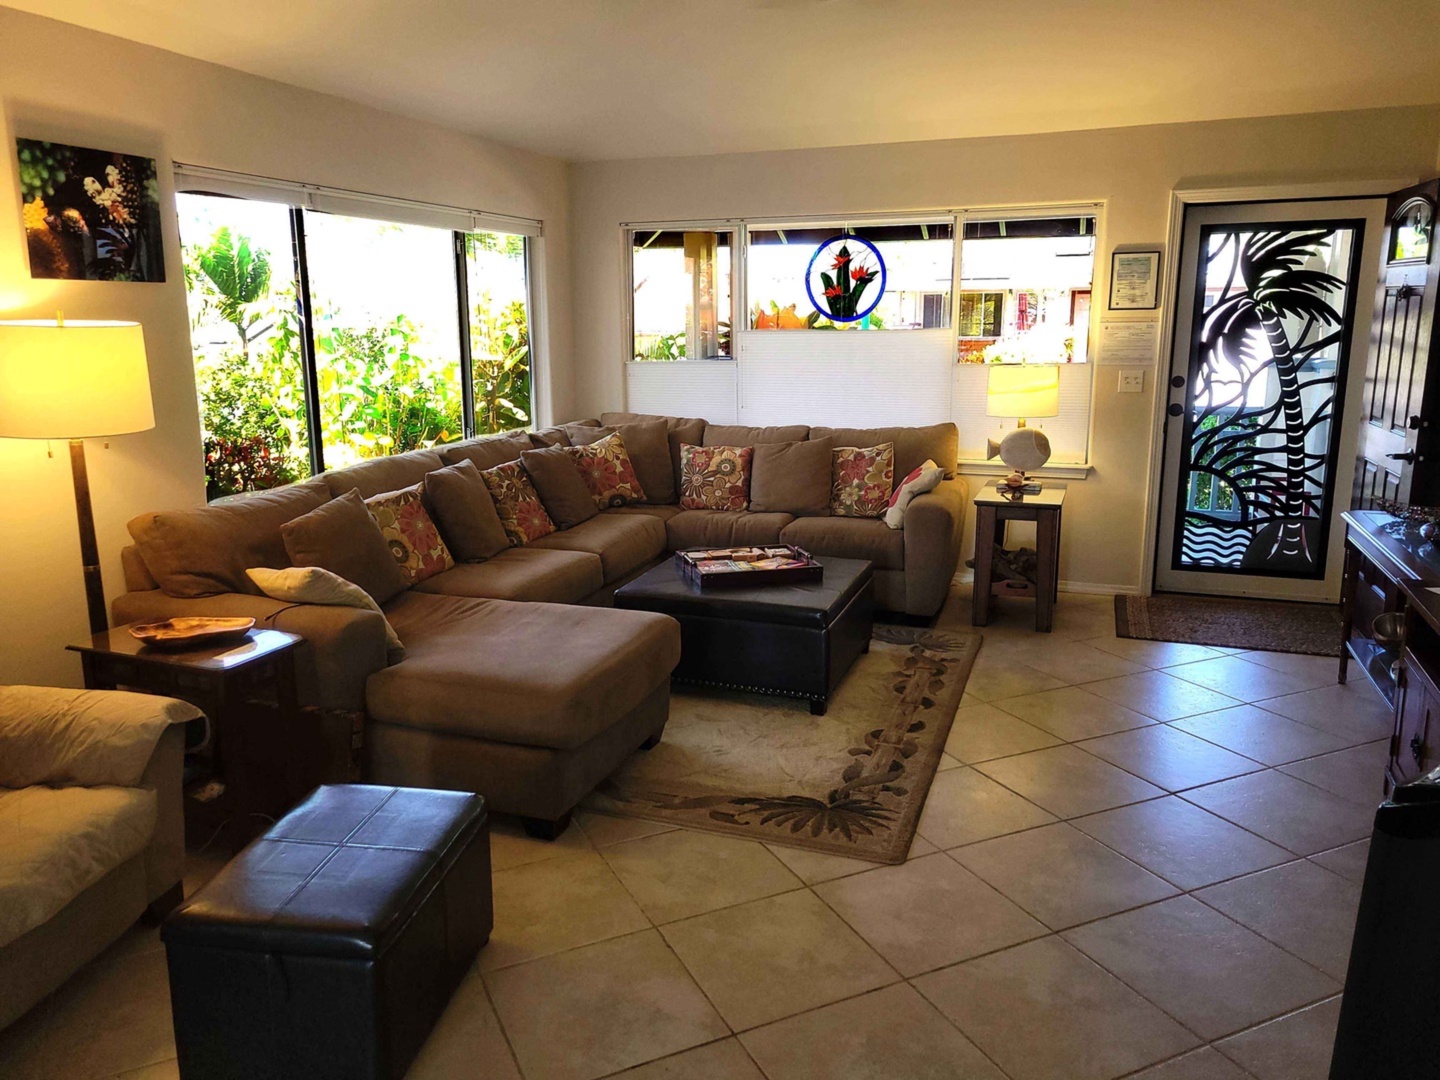 Kailua Kona Vacation Rentals, Hale Alaula - Ocean View - Living Room with sectional sofas.